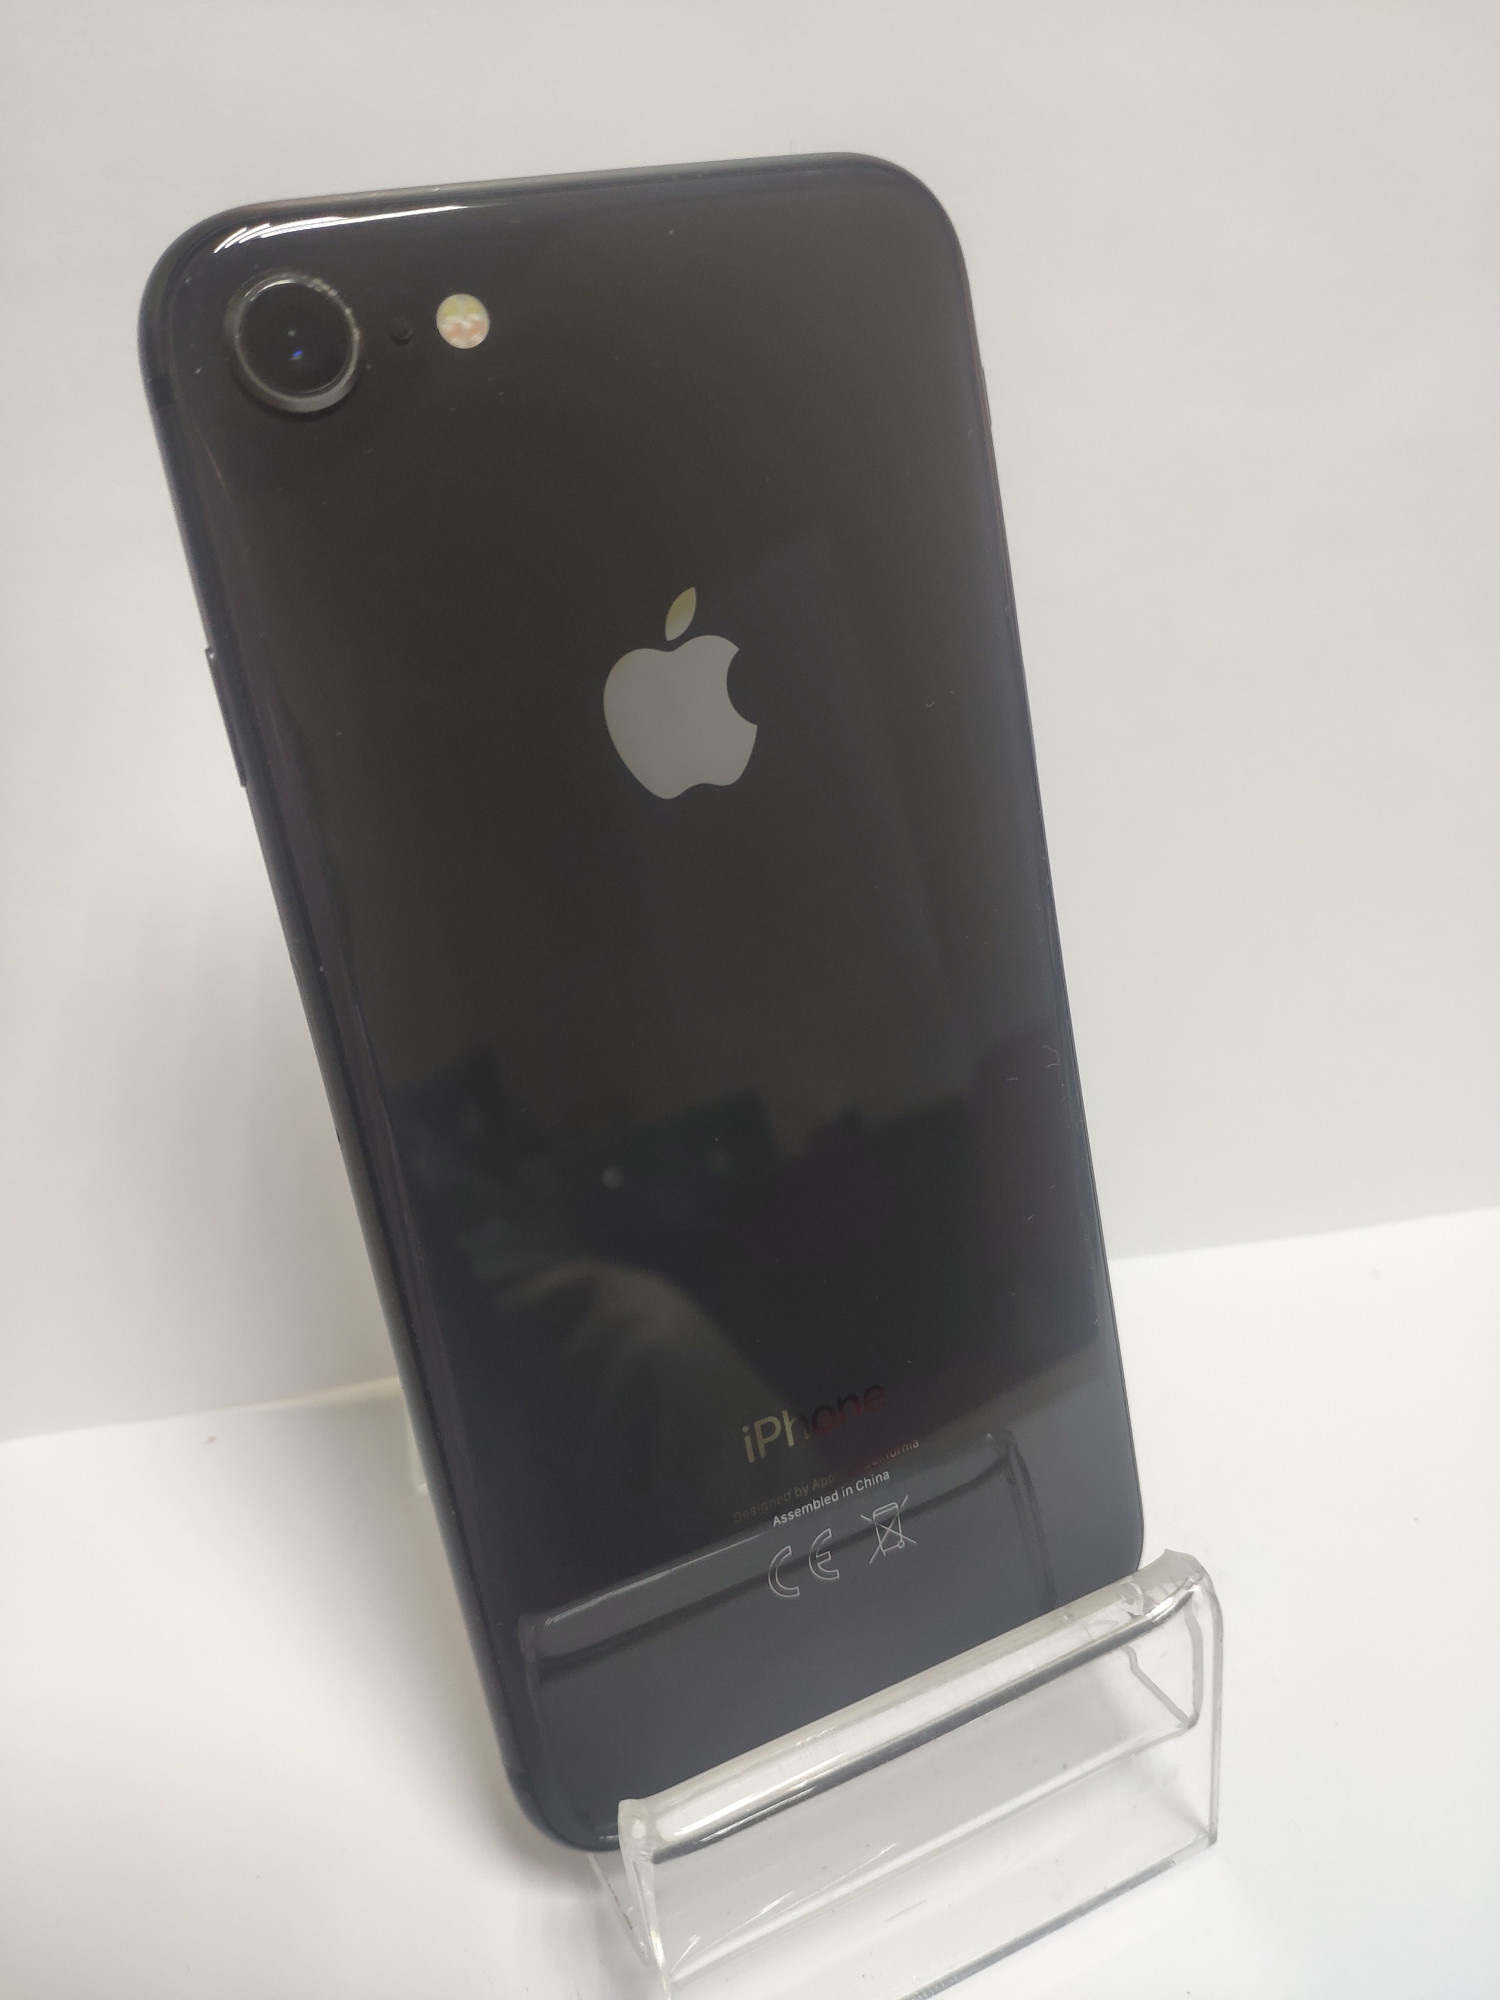 Apple iPhone 8 64Gb Space Gray (MQ6G2) 4